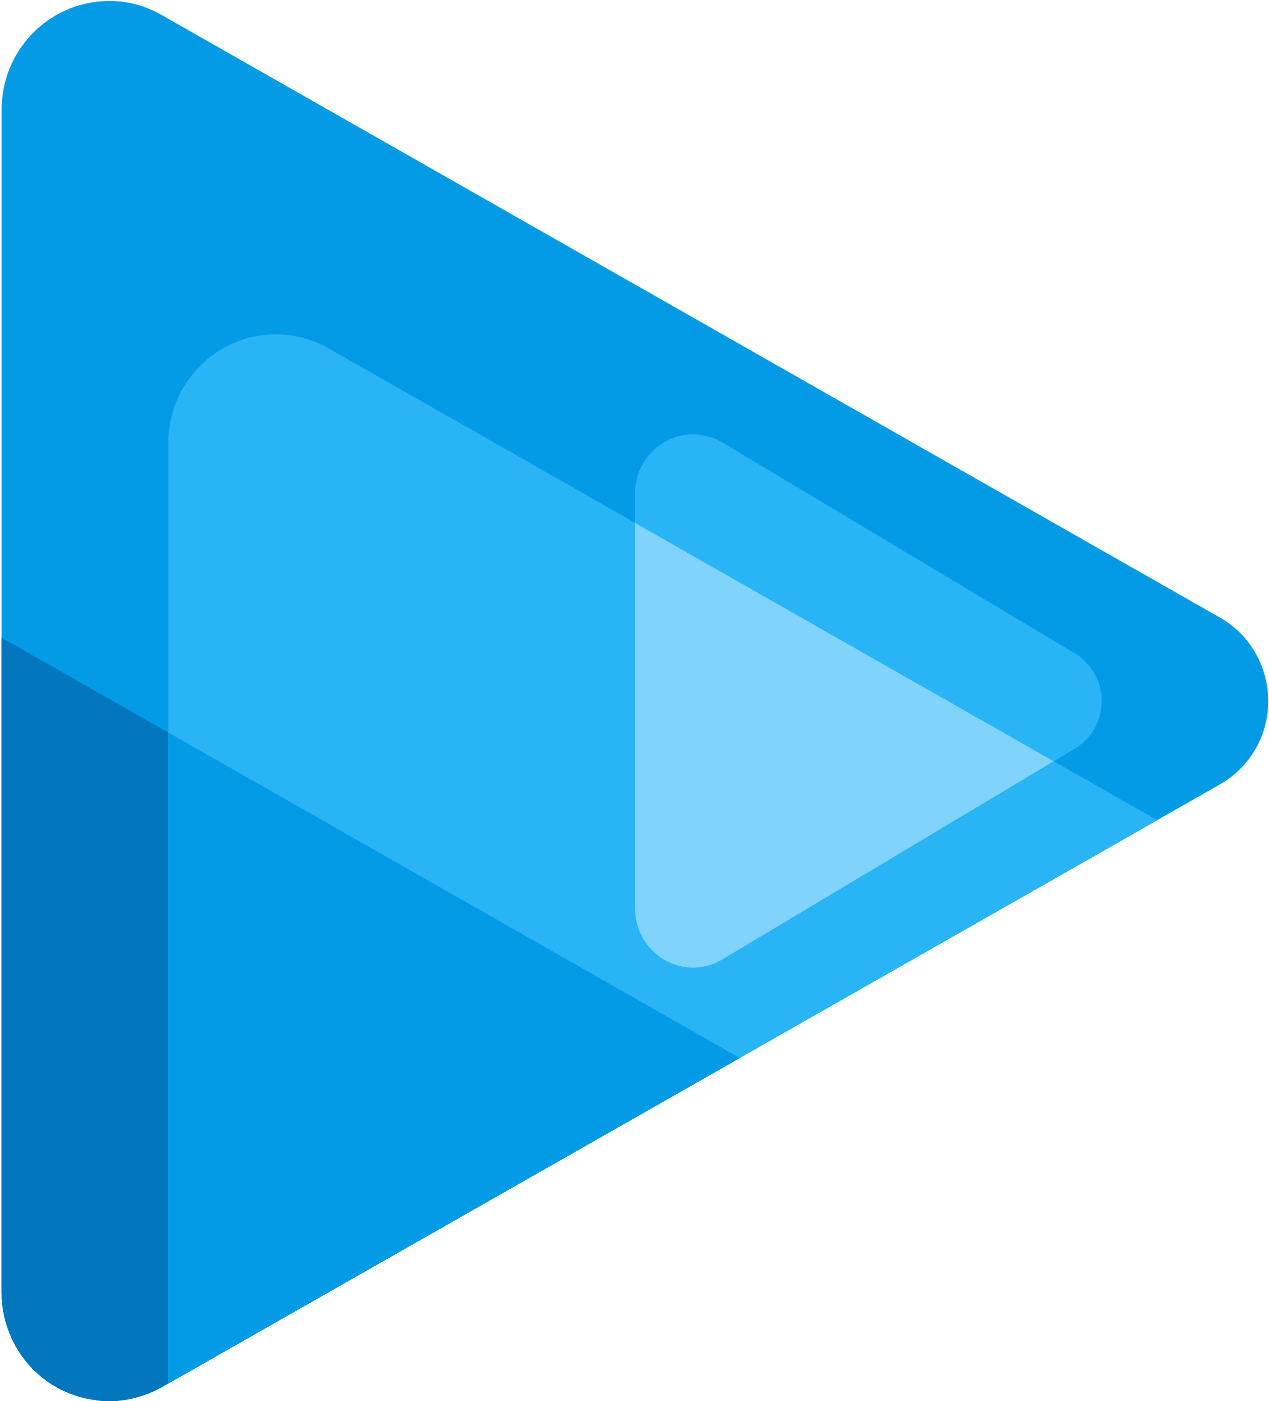 Sony Logo Blue Background PNG image